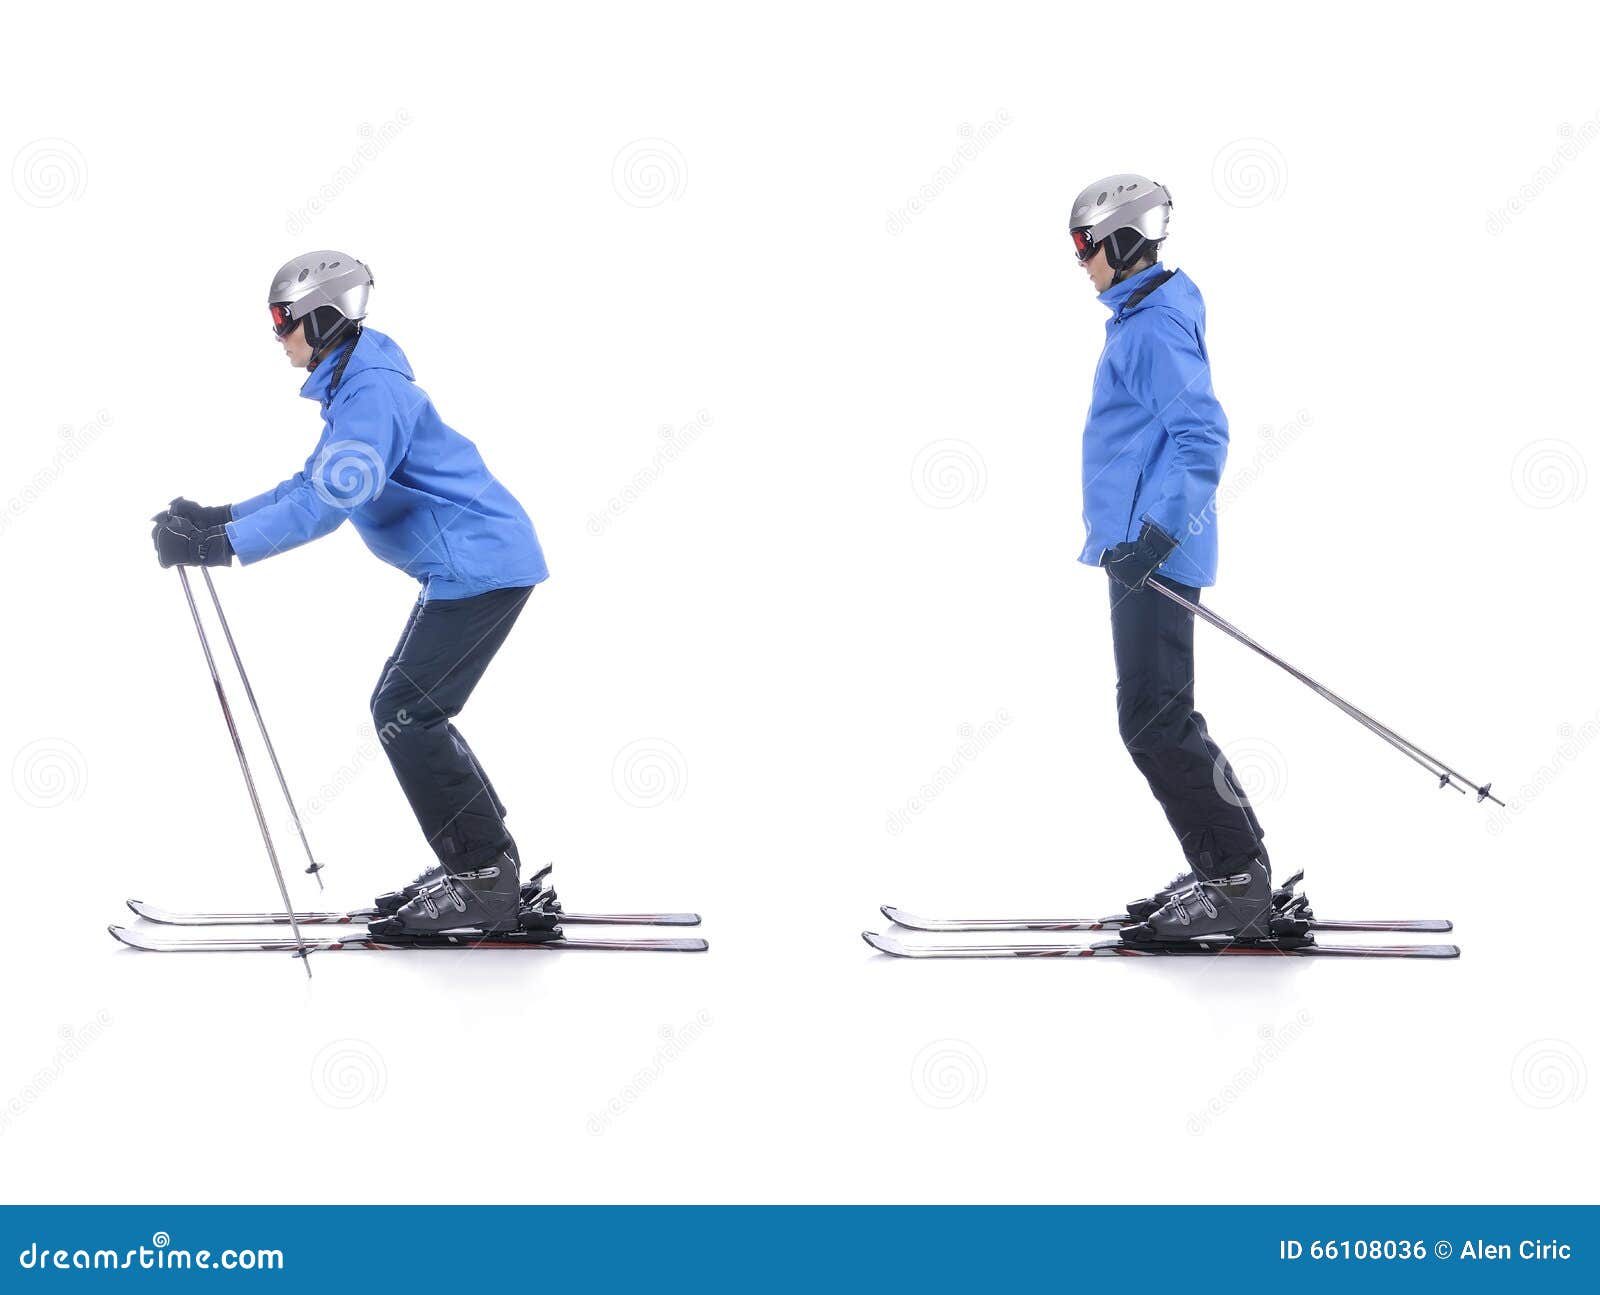 skiier demonstrate how to push away in skiing. sliding.